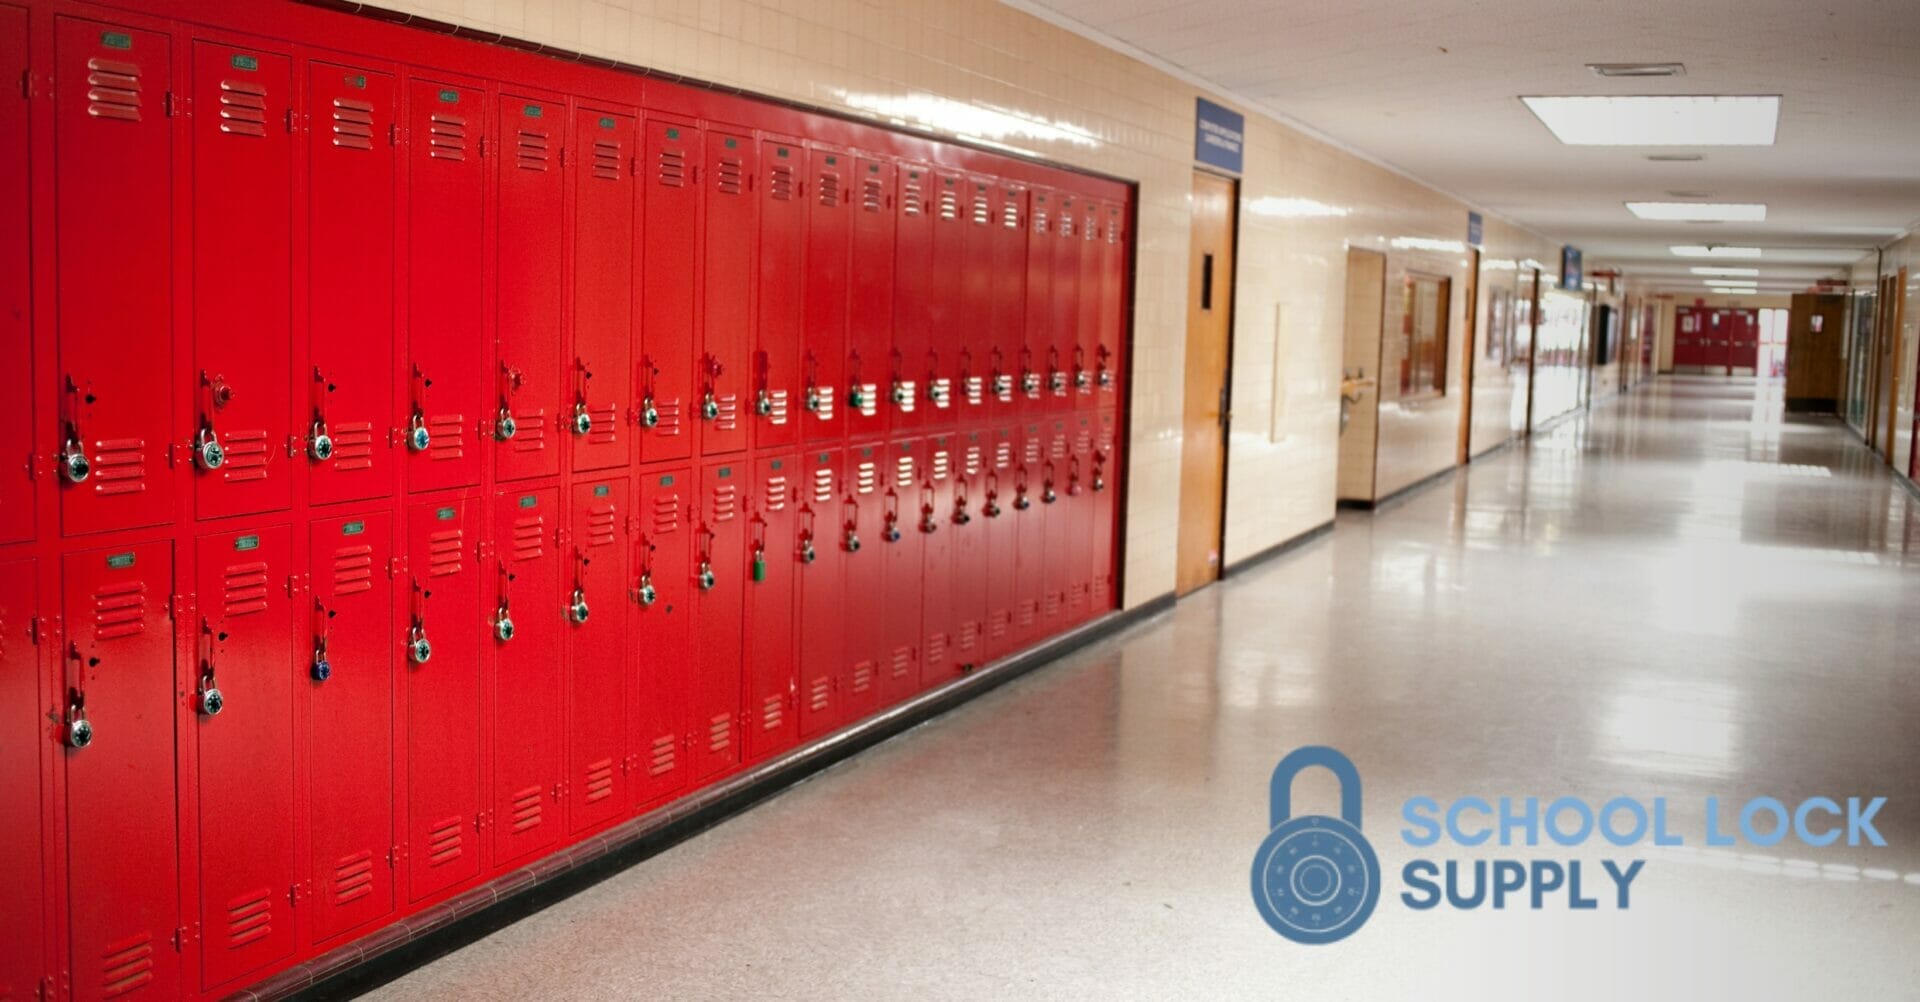 School Lock Supply for Your School Locker Locks